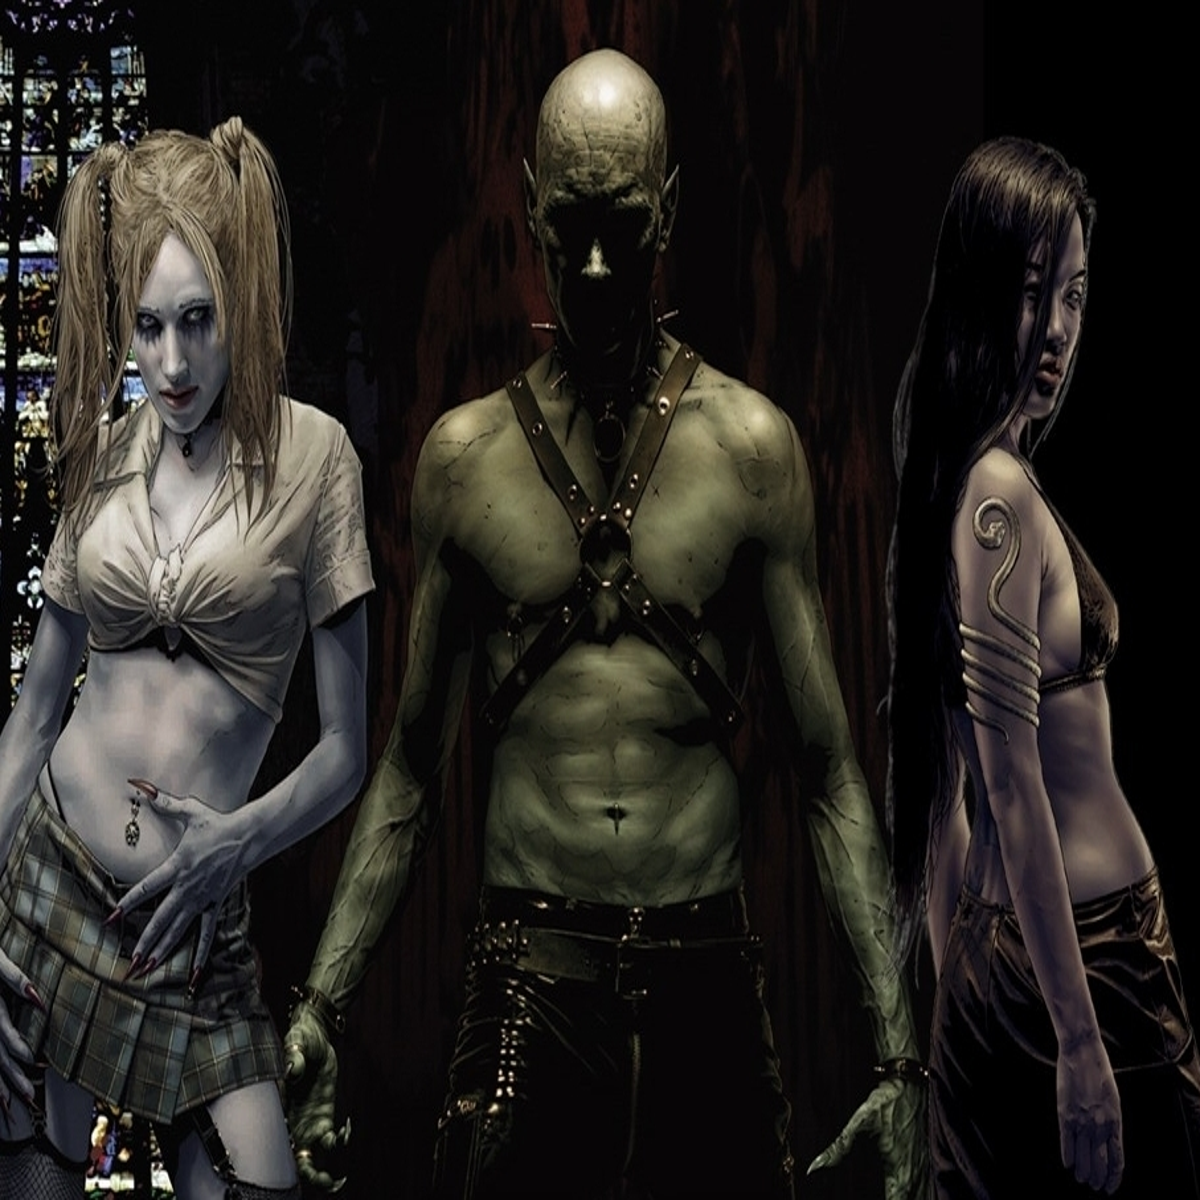 Vampire: The Masquerade—Bloodlines 2 finally reveals the Malkavians